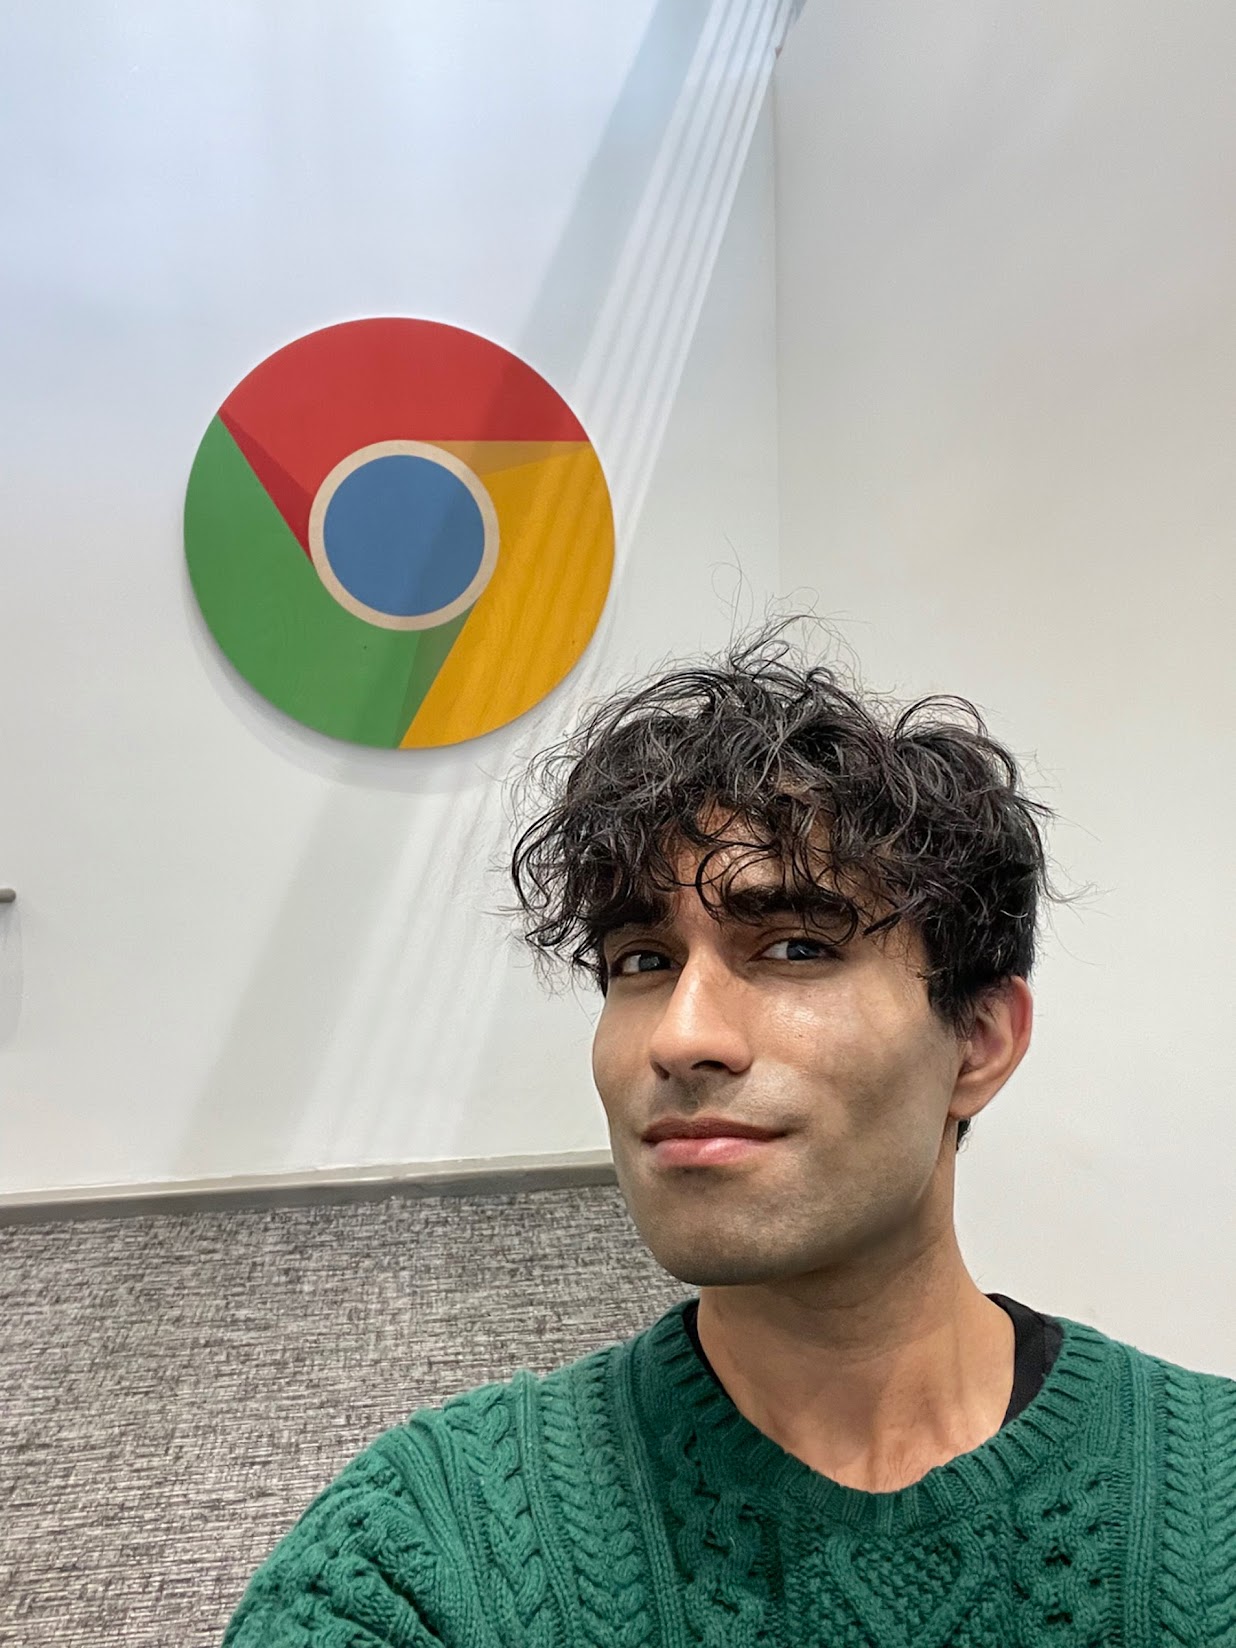 Photo of Addy Osmani - Google Chrome logo